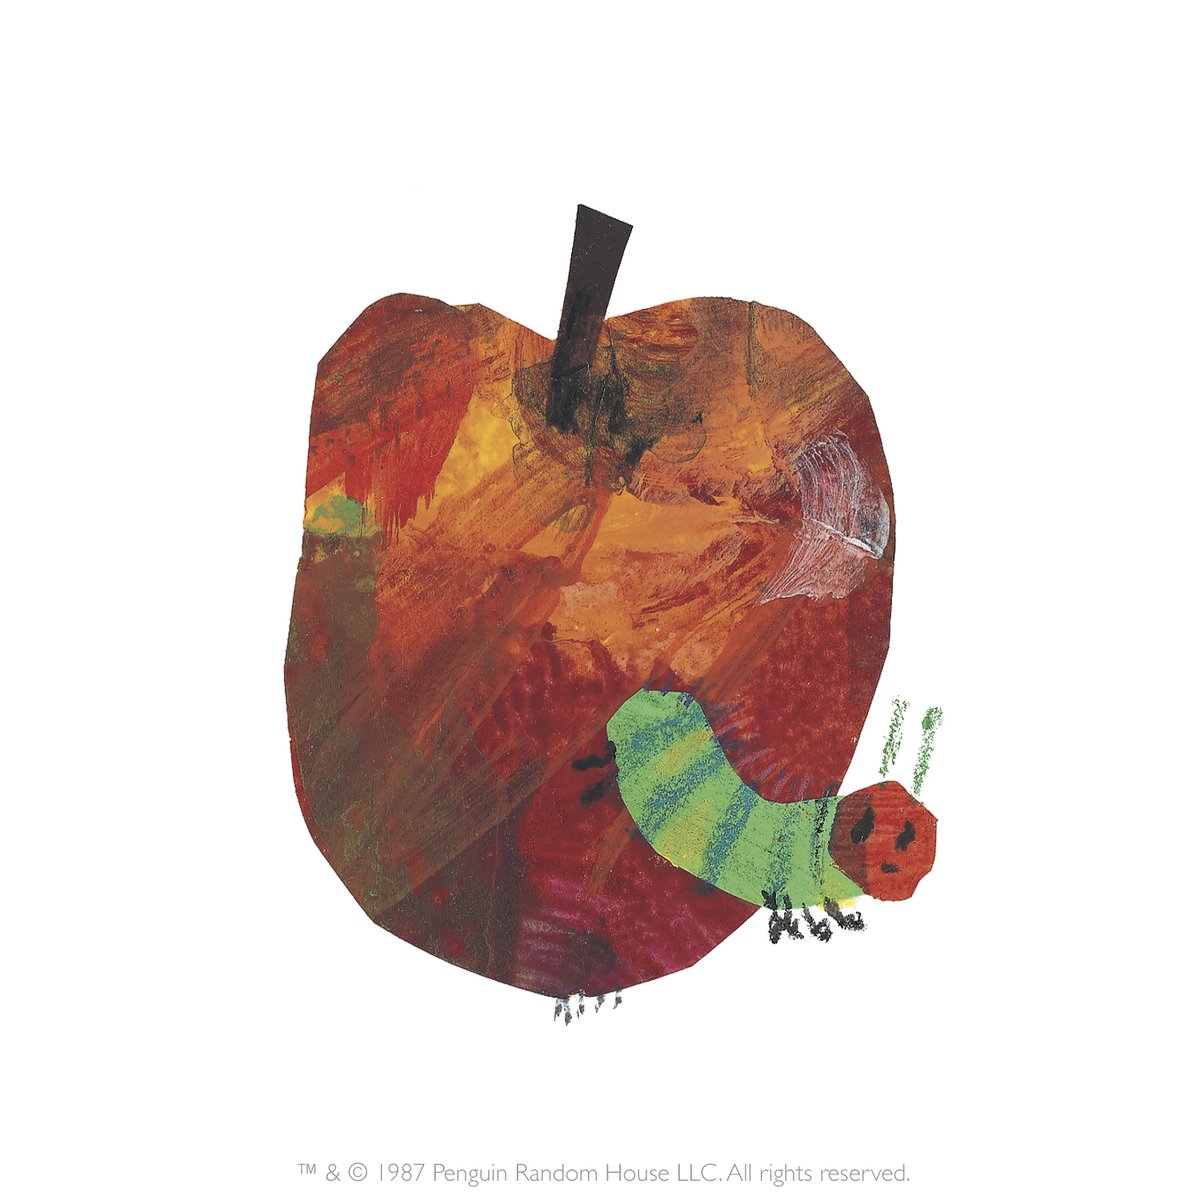 「Happy Teacher Appreciation Week!

Illust」|eric carleのイラスト